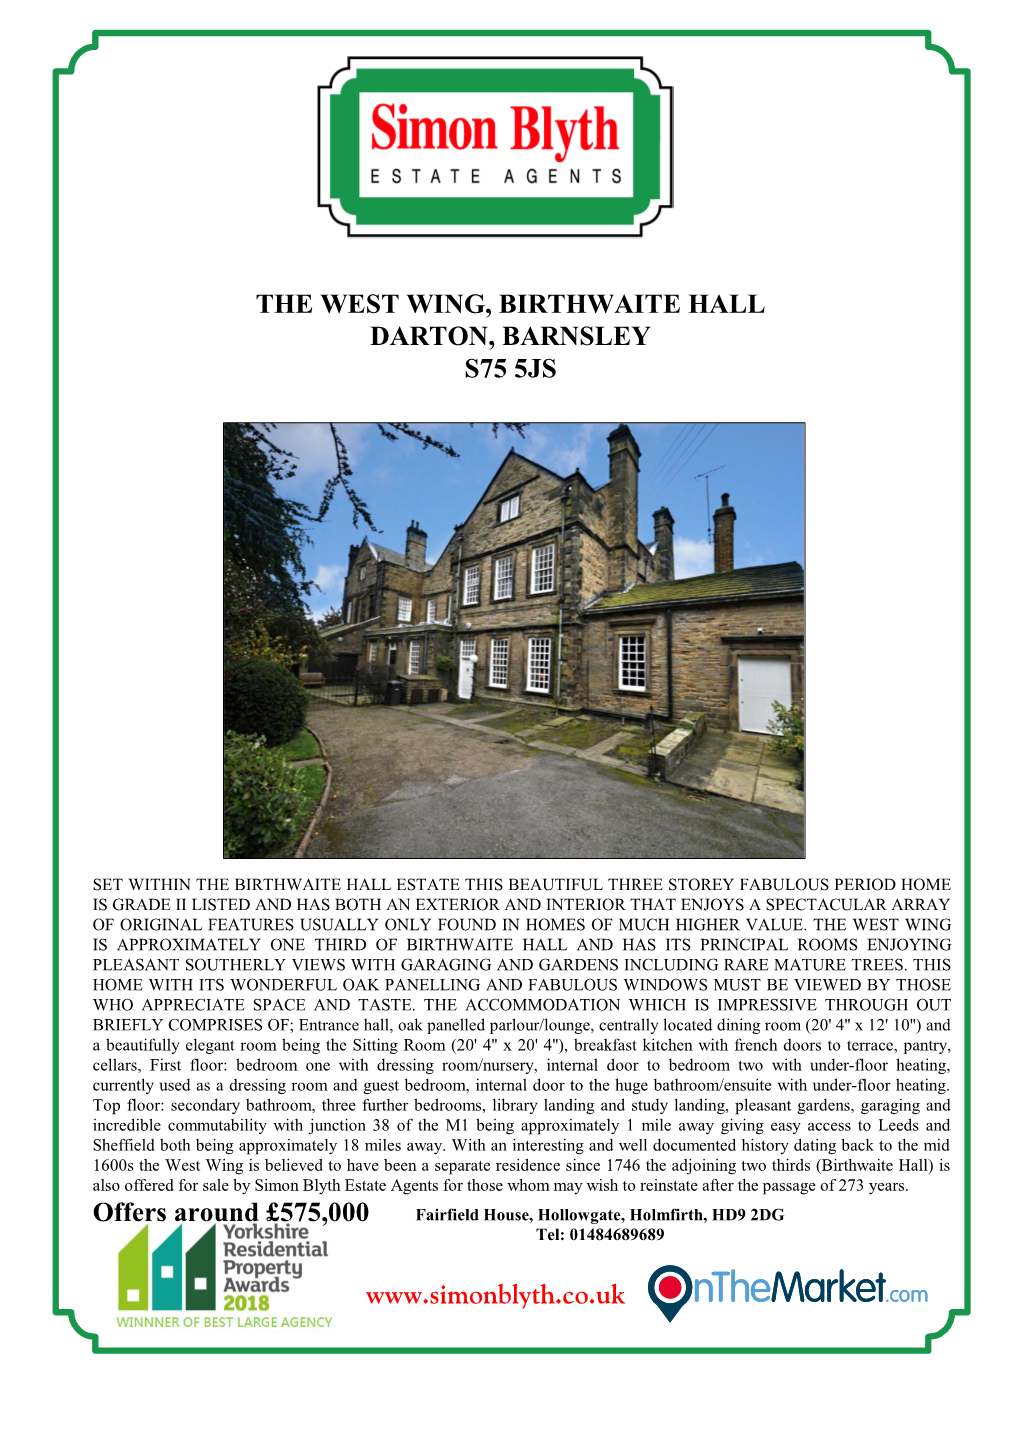 The West Wing, Birthwaite Hall Darton, Barnsley S75 5Js